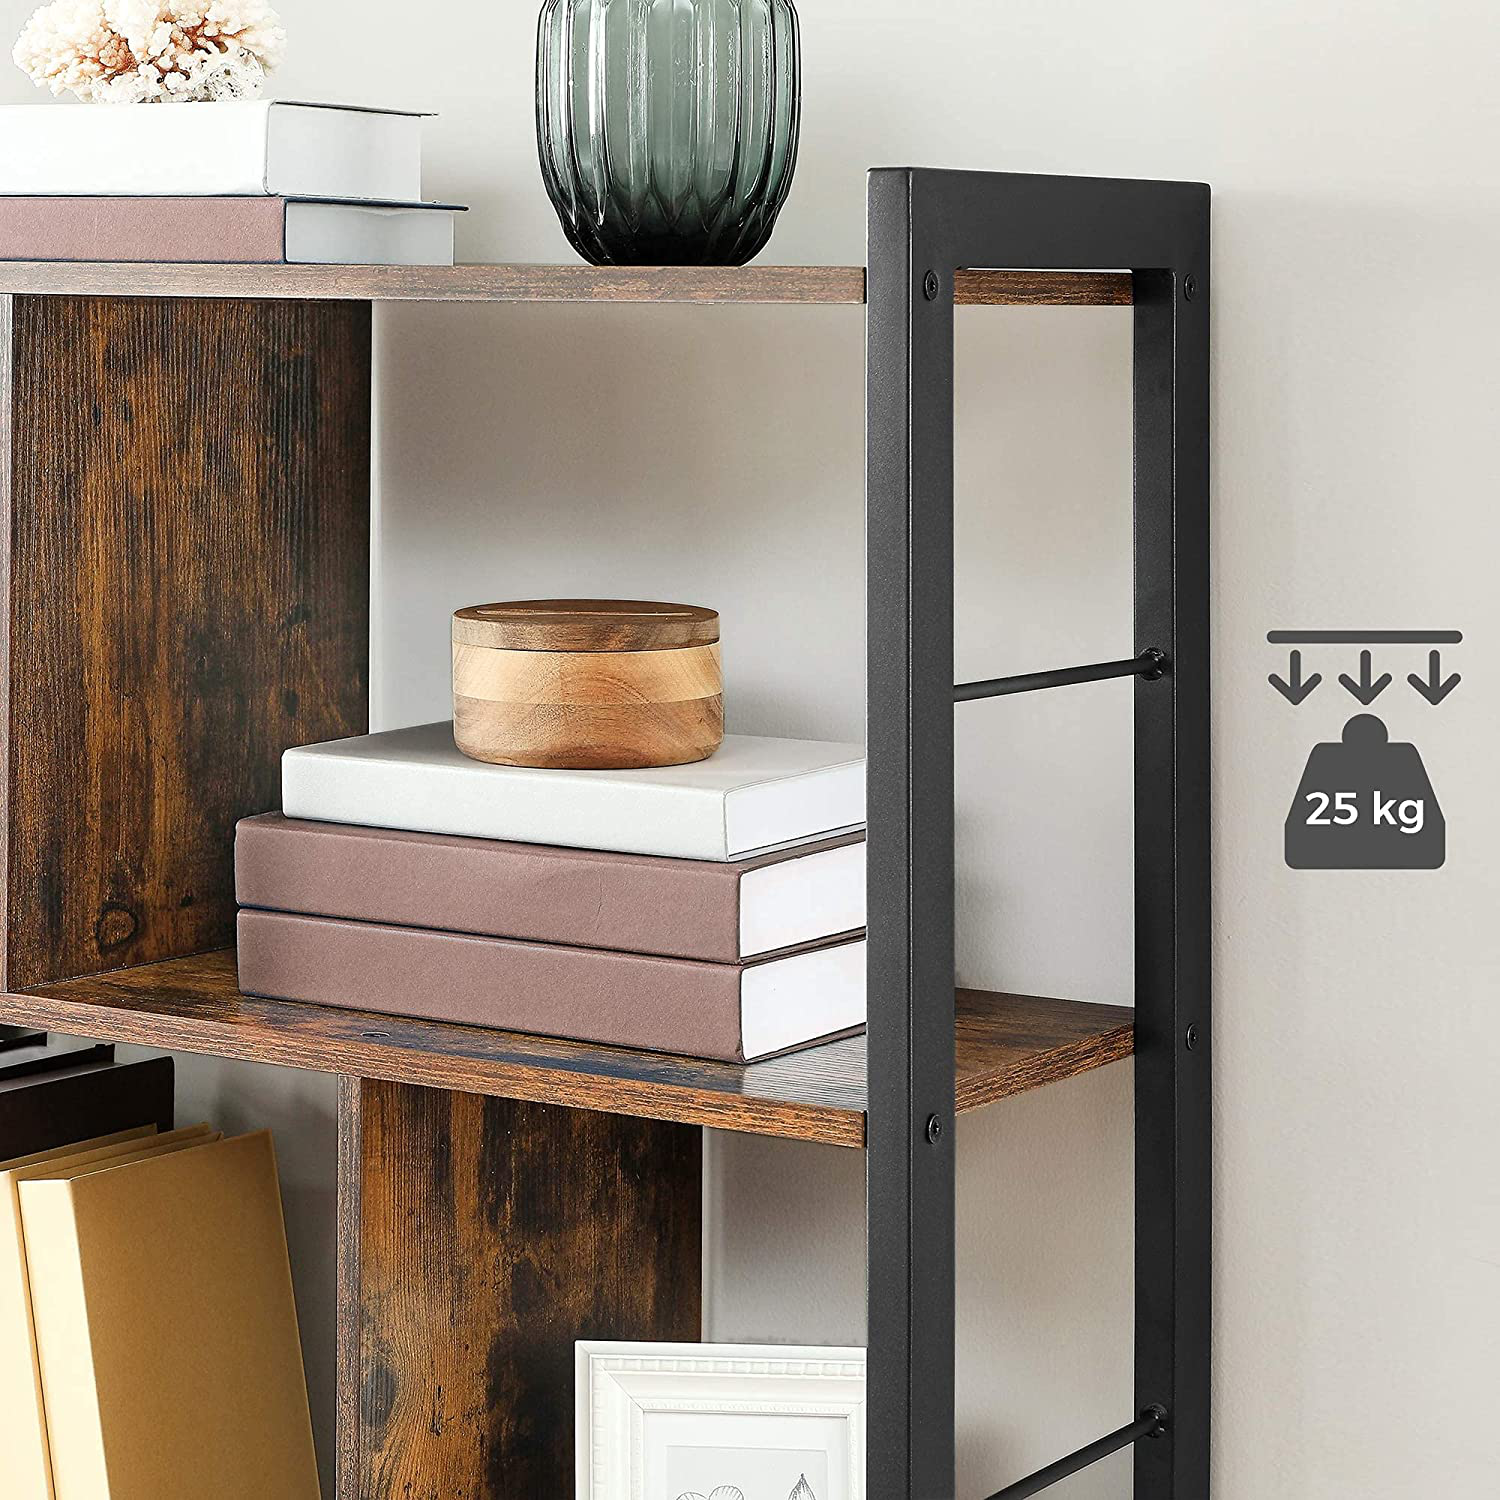 Rena Bookshelf with Steel Frame